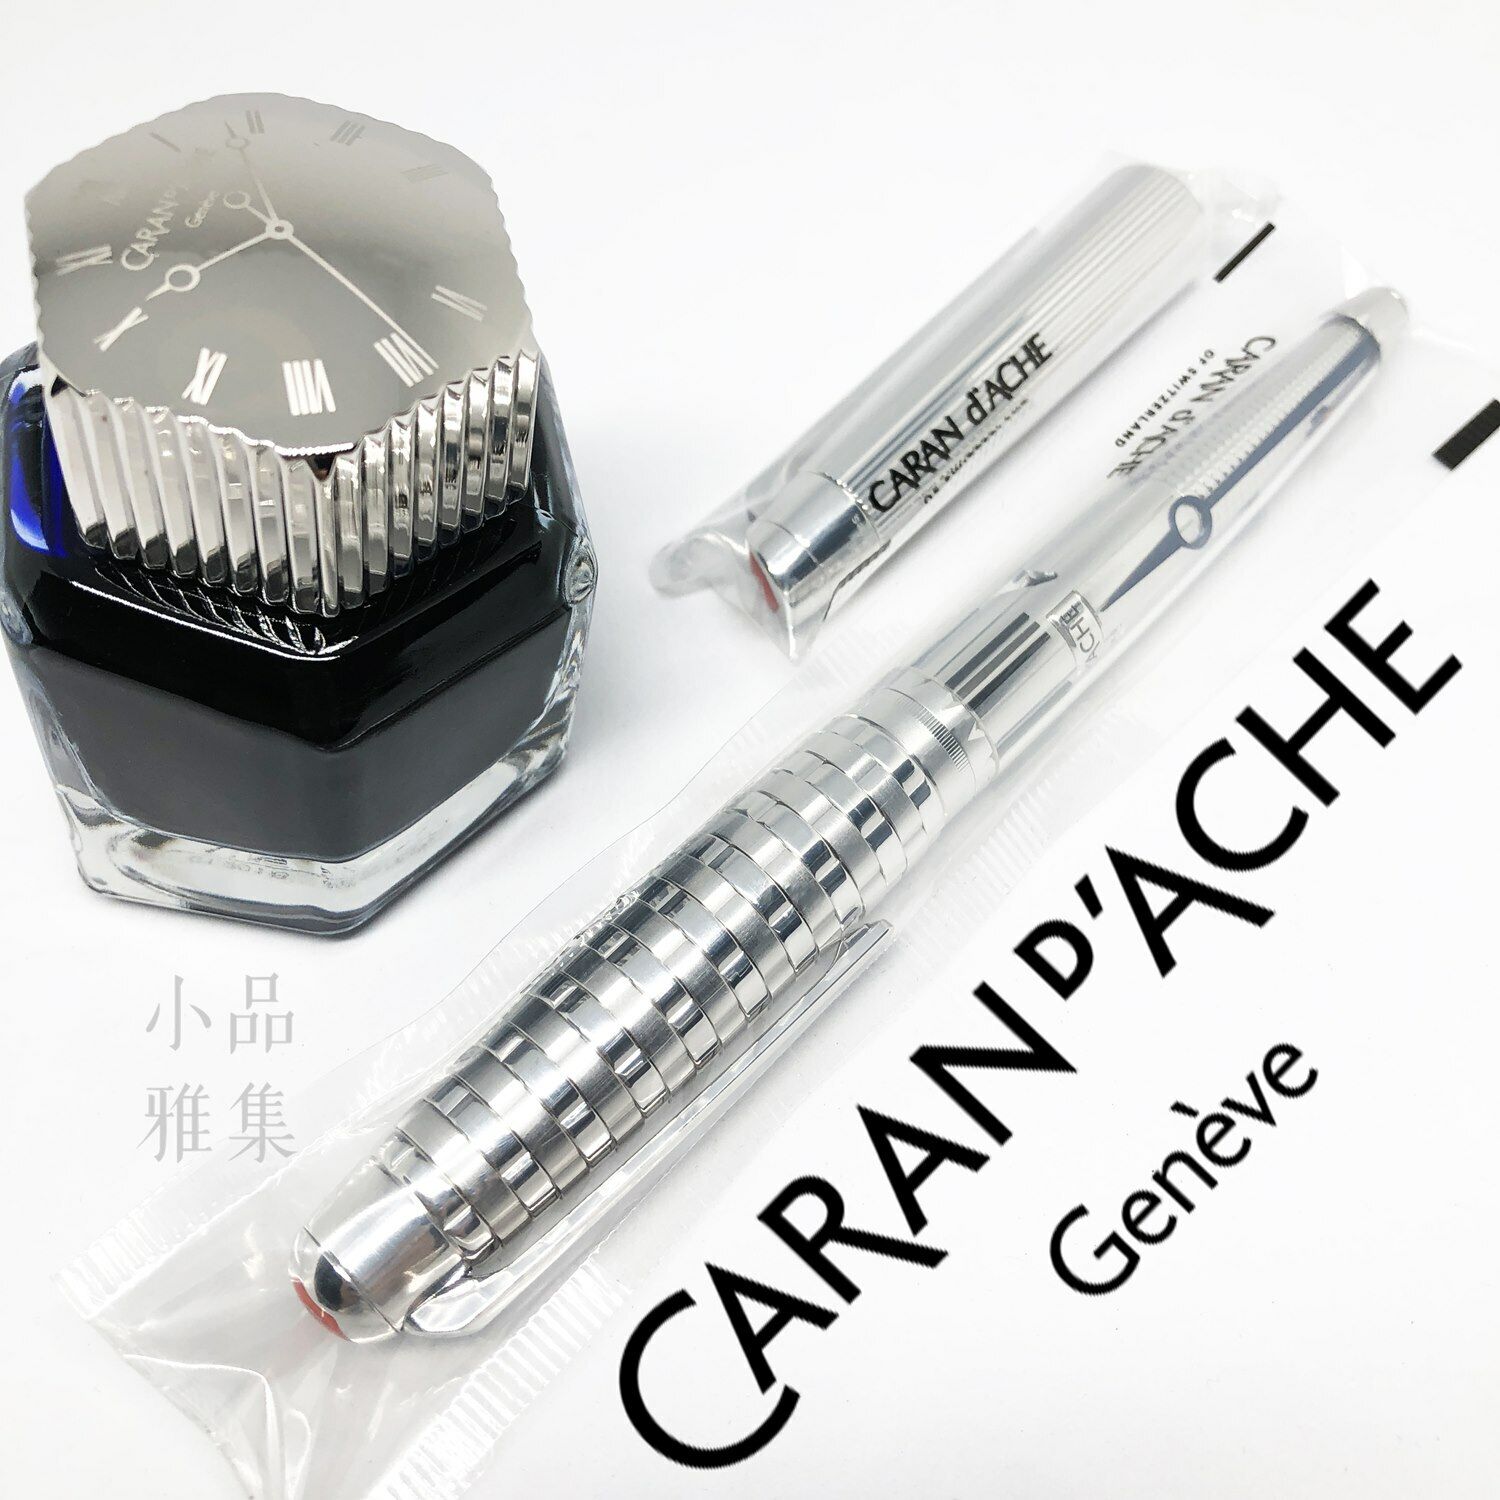 Caran d'Ache Limited Edition 500 1010 Timekeeper Silver 18K Fountain Pen